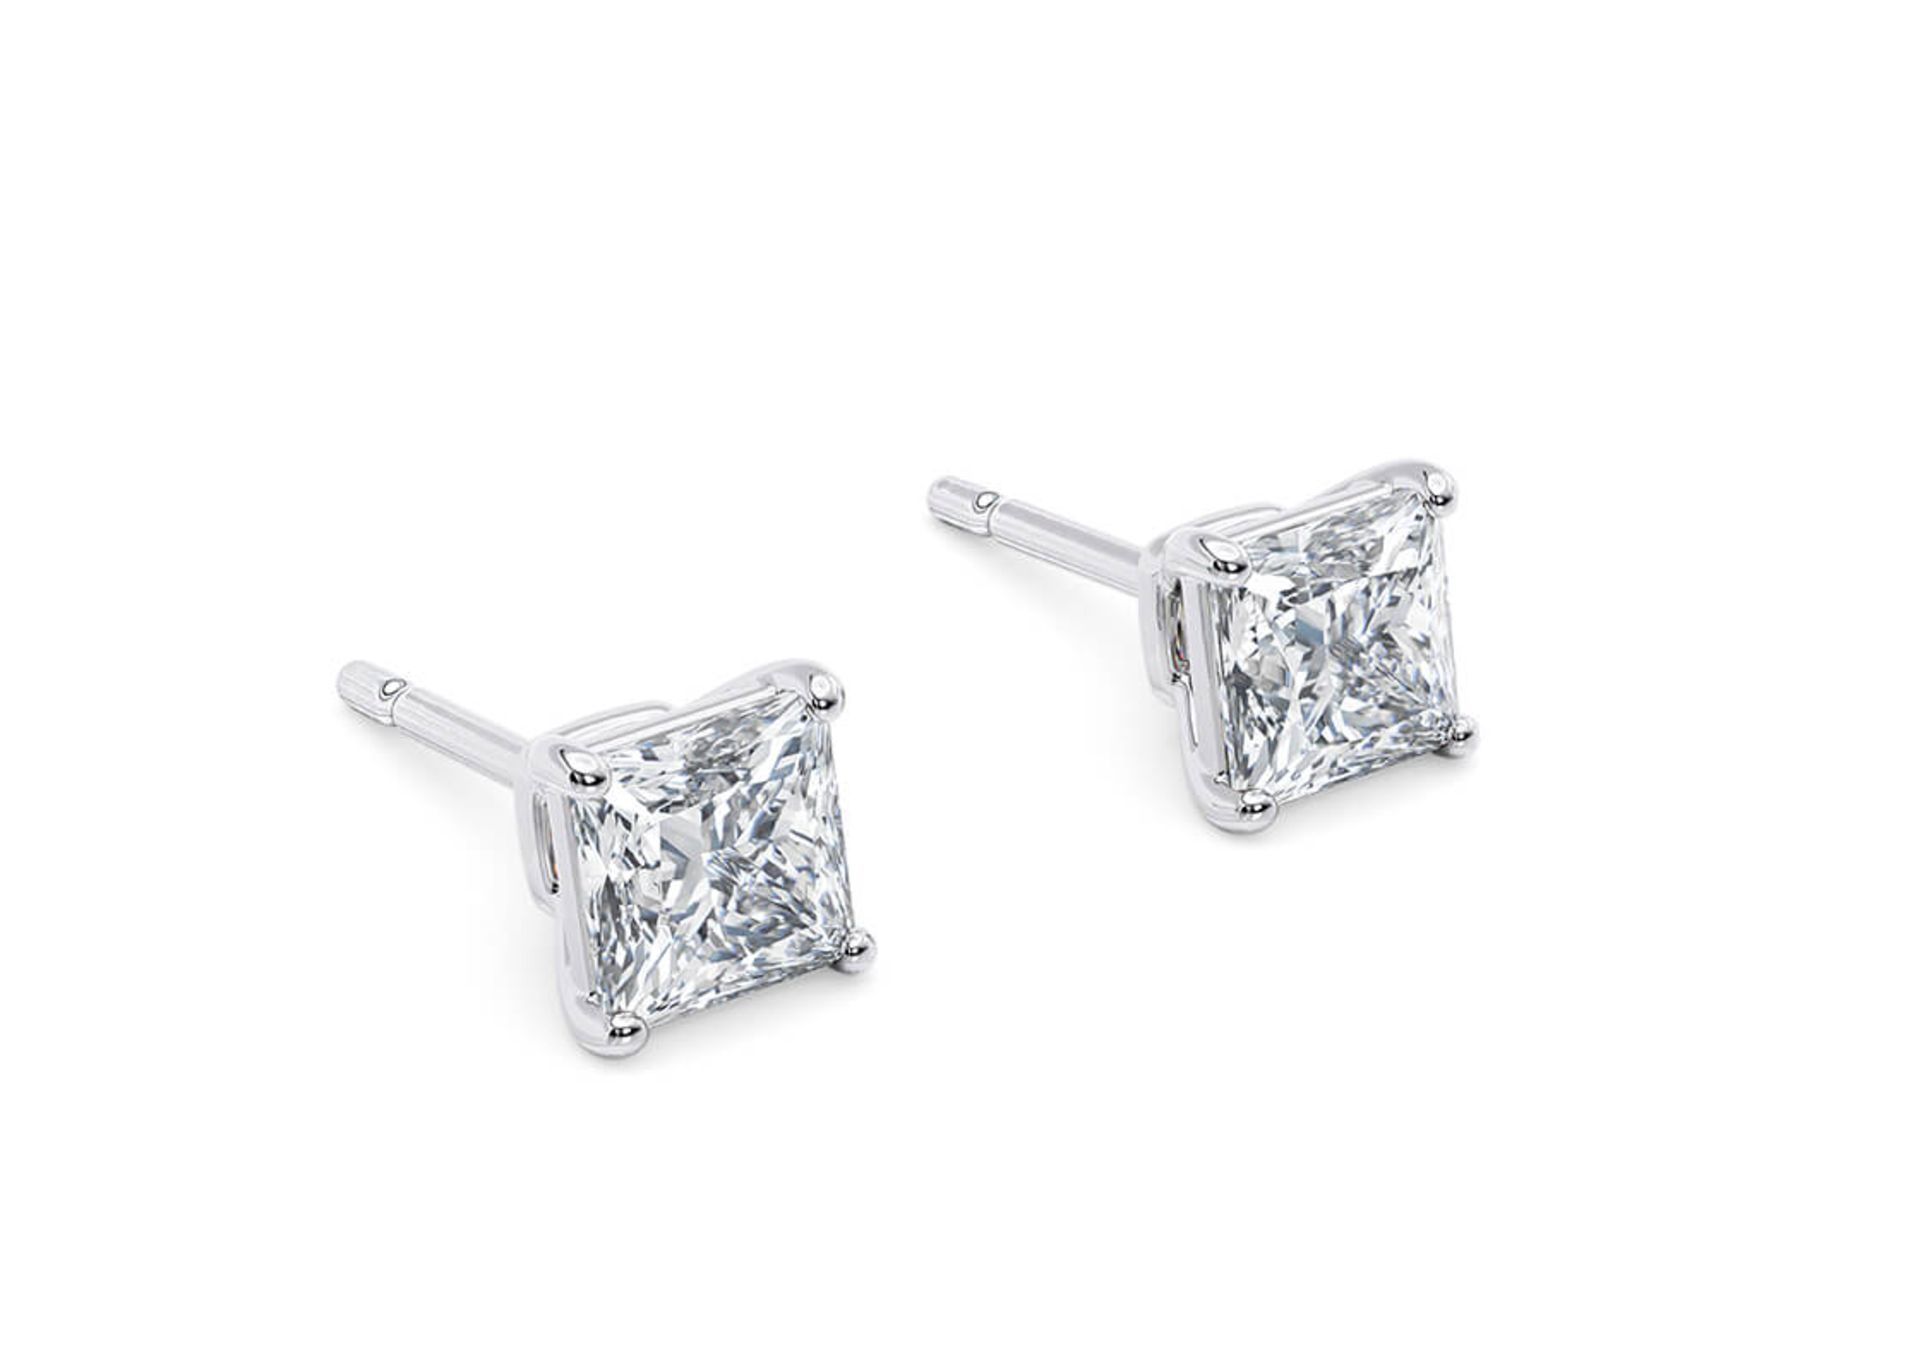 Princess Cut 2.00 Carat Diamond Earrings Set in 18kt White Gold - D Colour VVS1 Clarity - IGI - Image 2 of 3